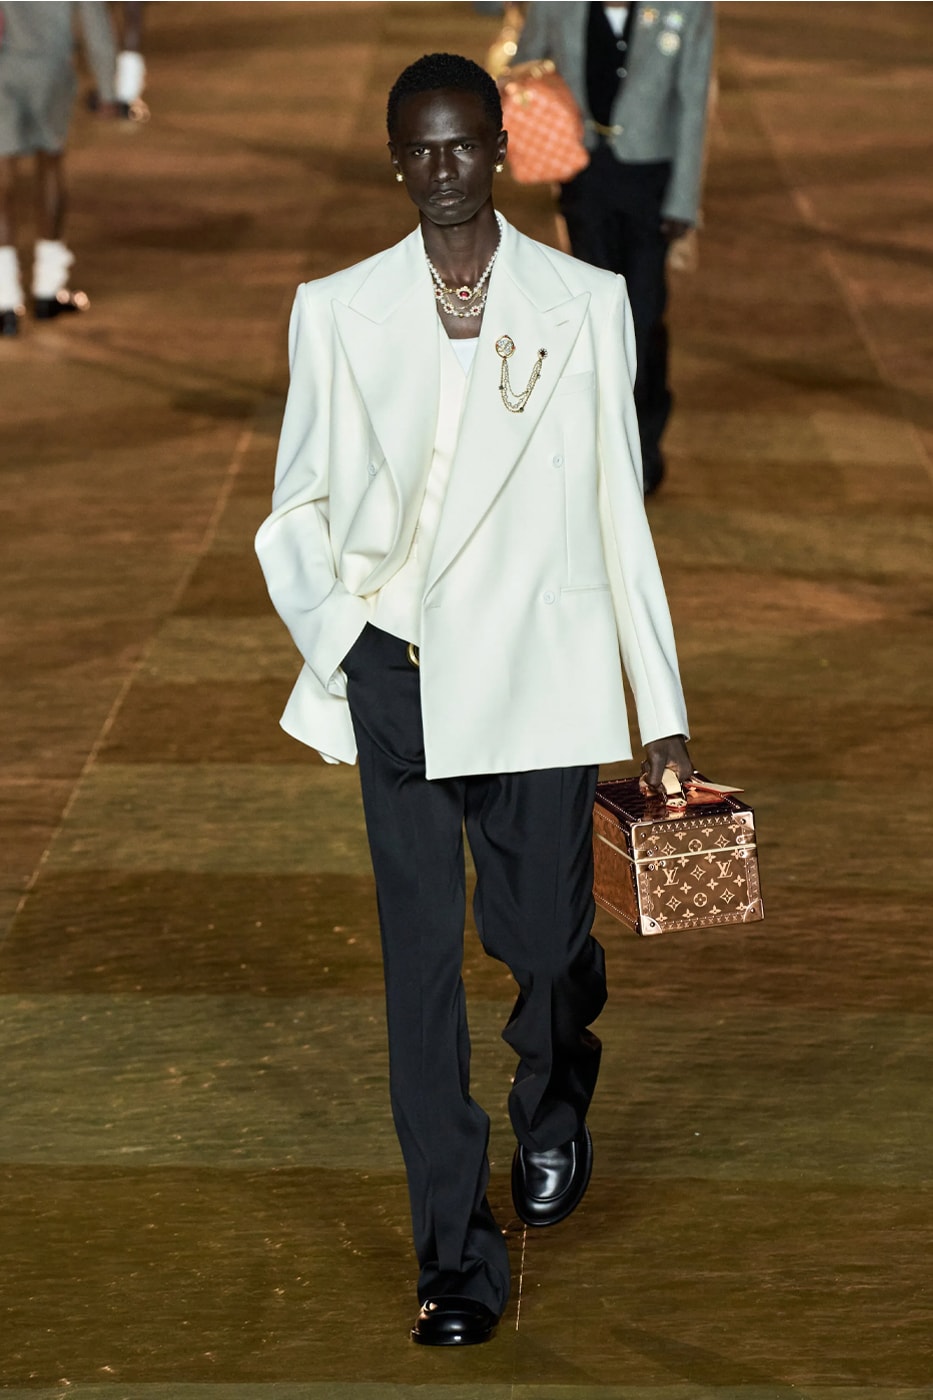 Ovrnundr on X: Louis Vuitton Men's SS24 belts by Pharrell https